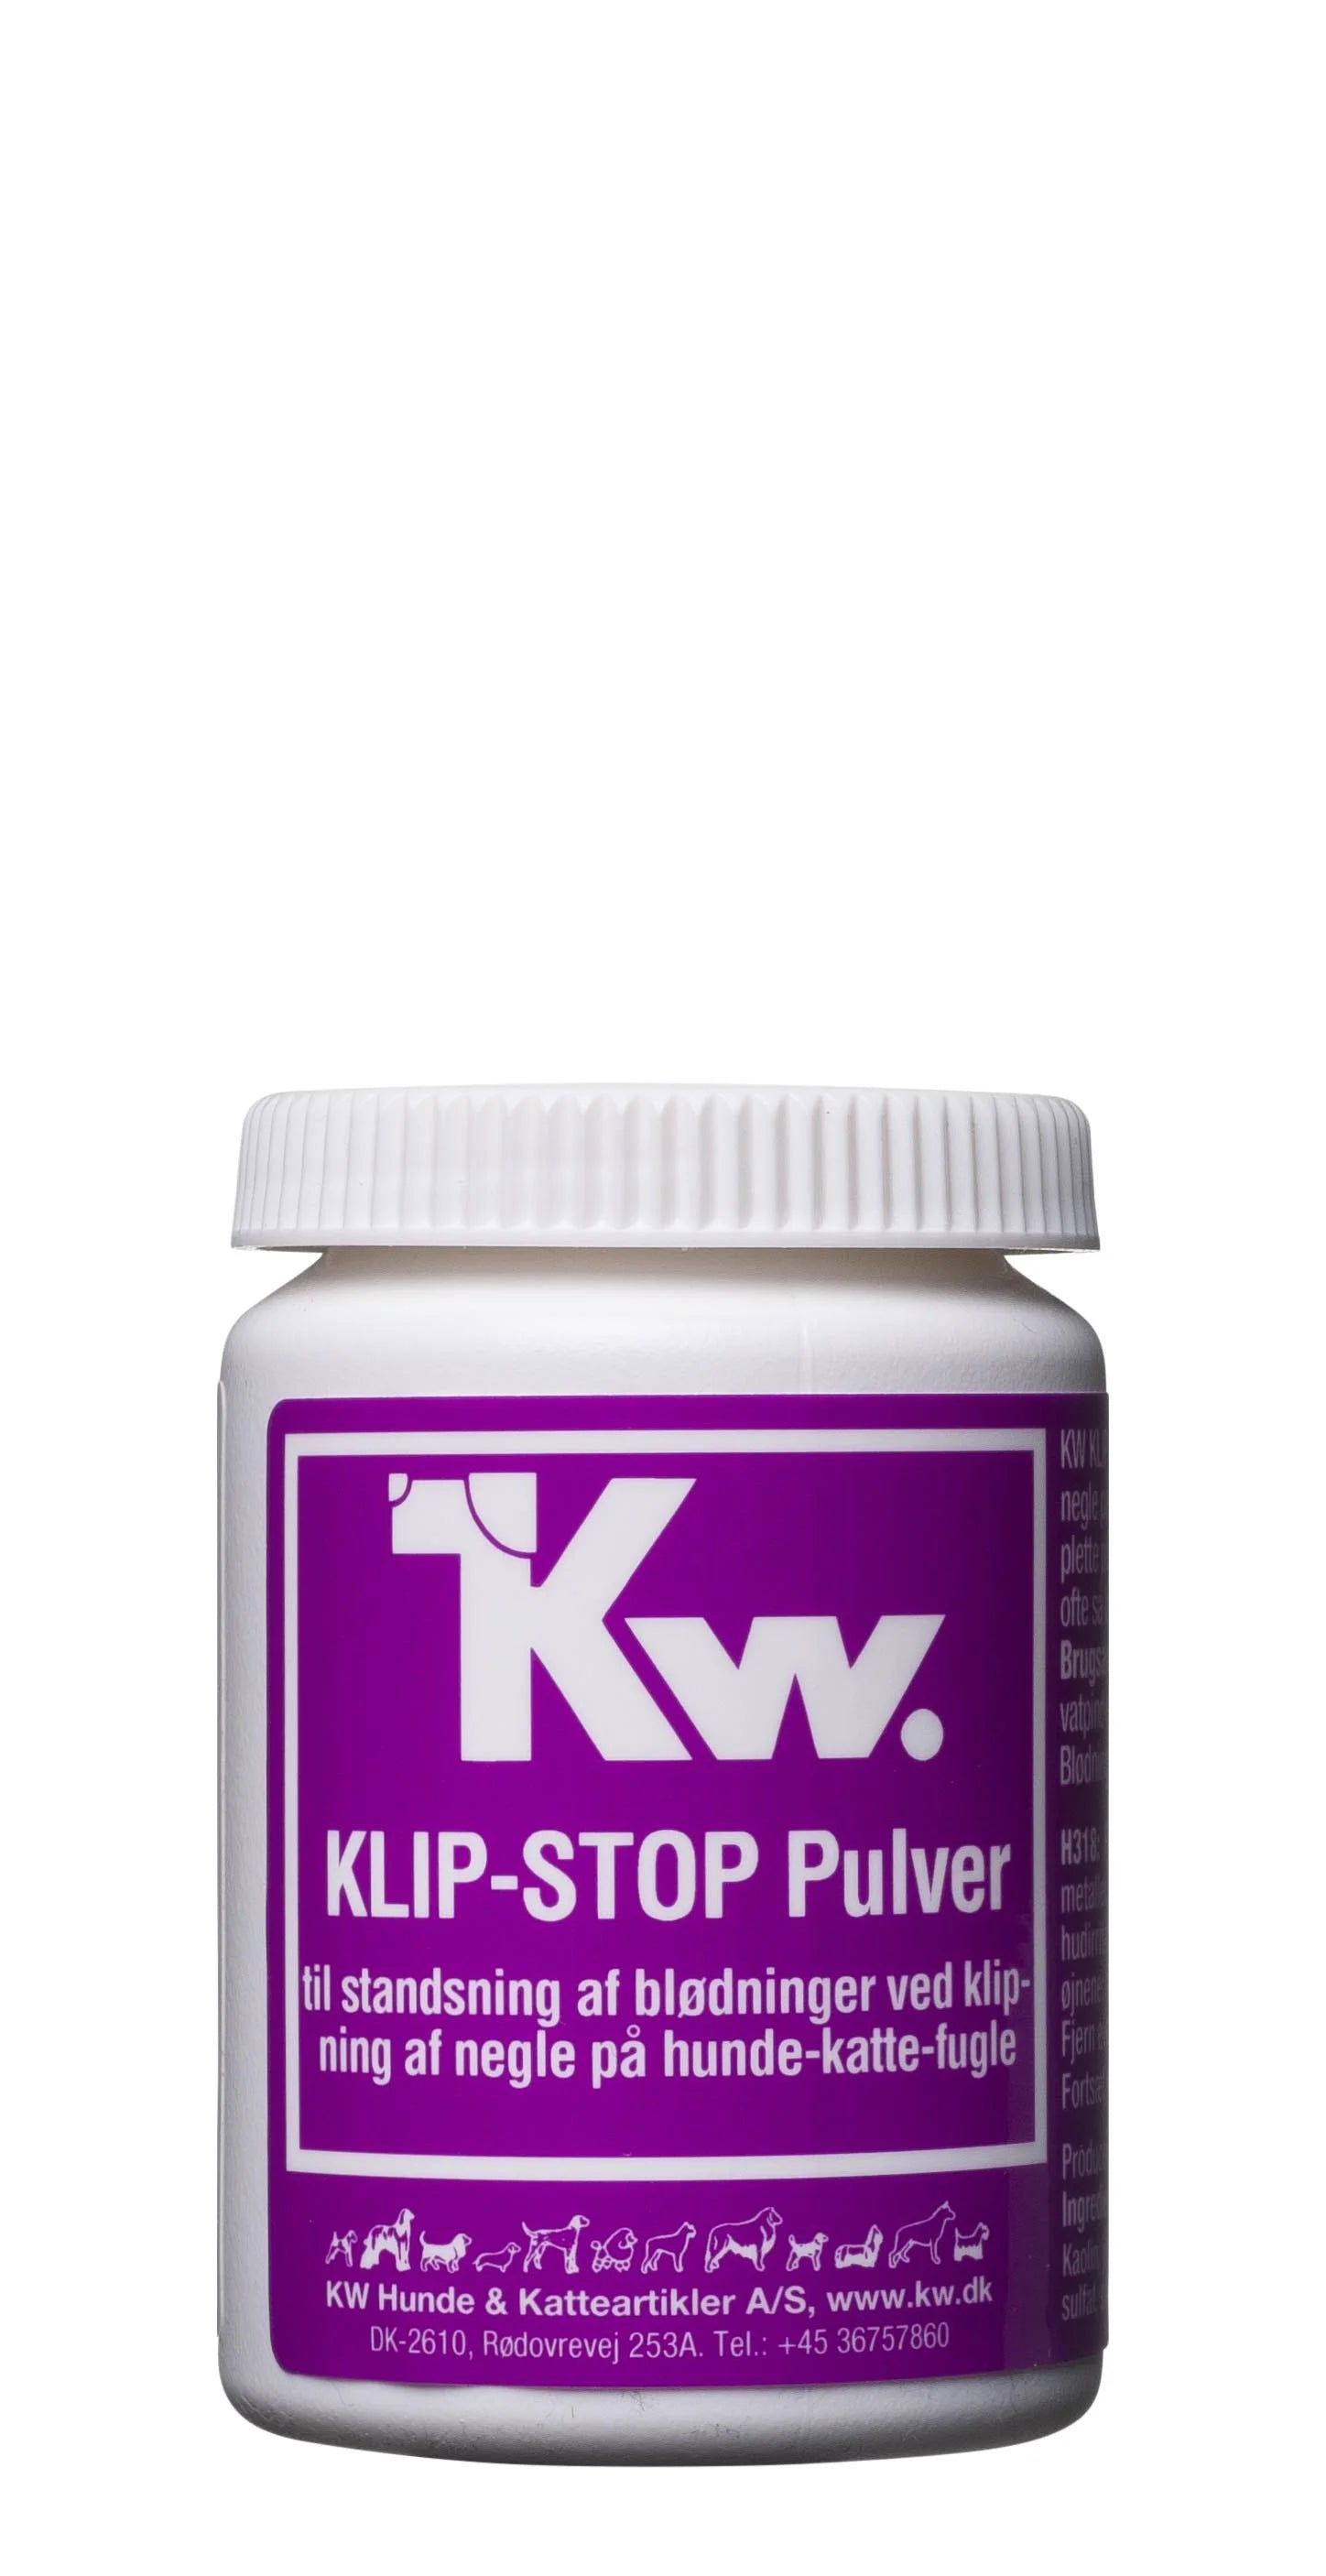 Se KW - KW Klip-Stop Pulver, 30g - Pet Supplies hos Petpower.dk